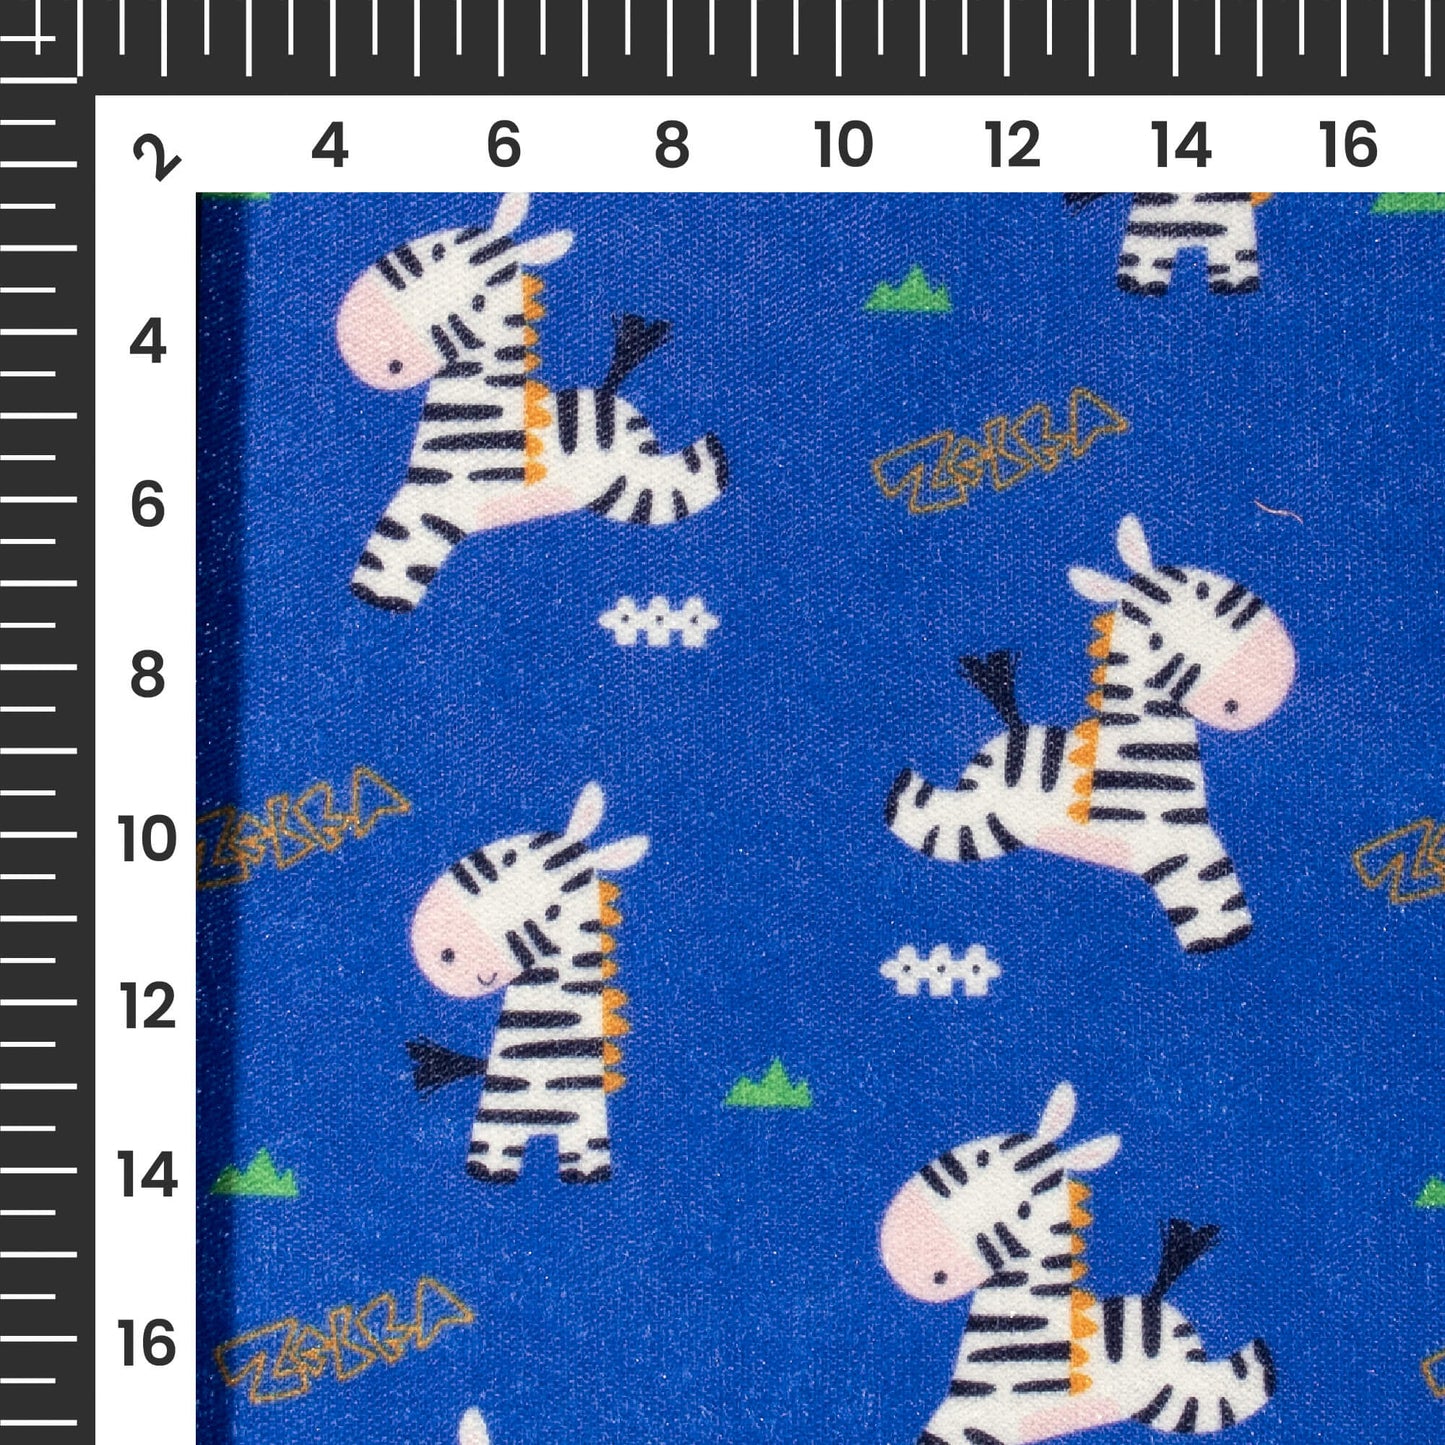 Zebra Print Premium Velvet Fabric